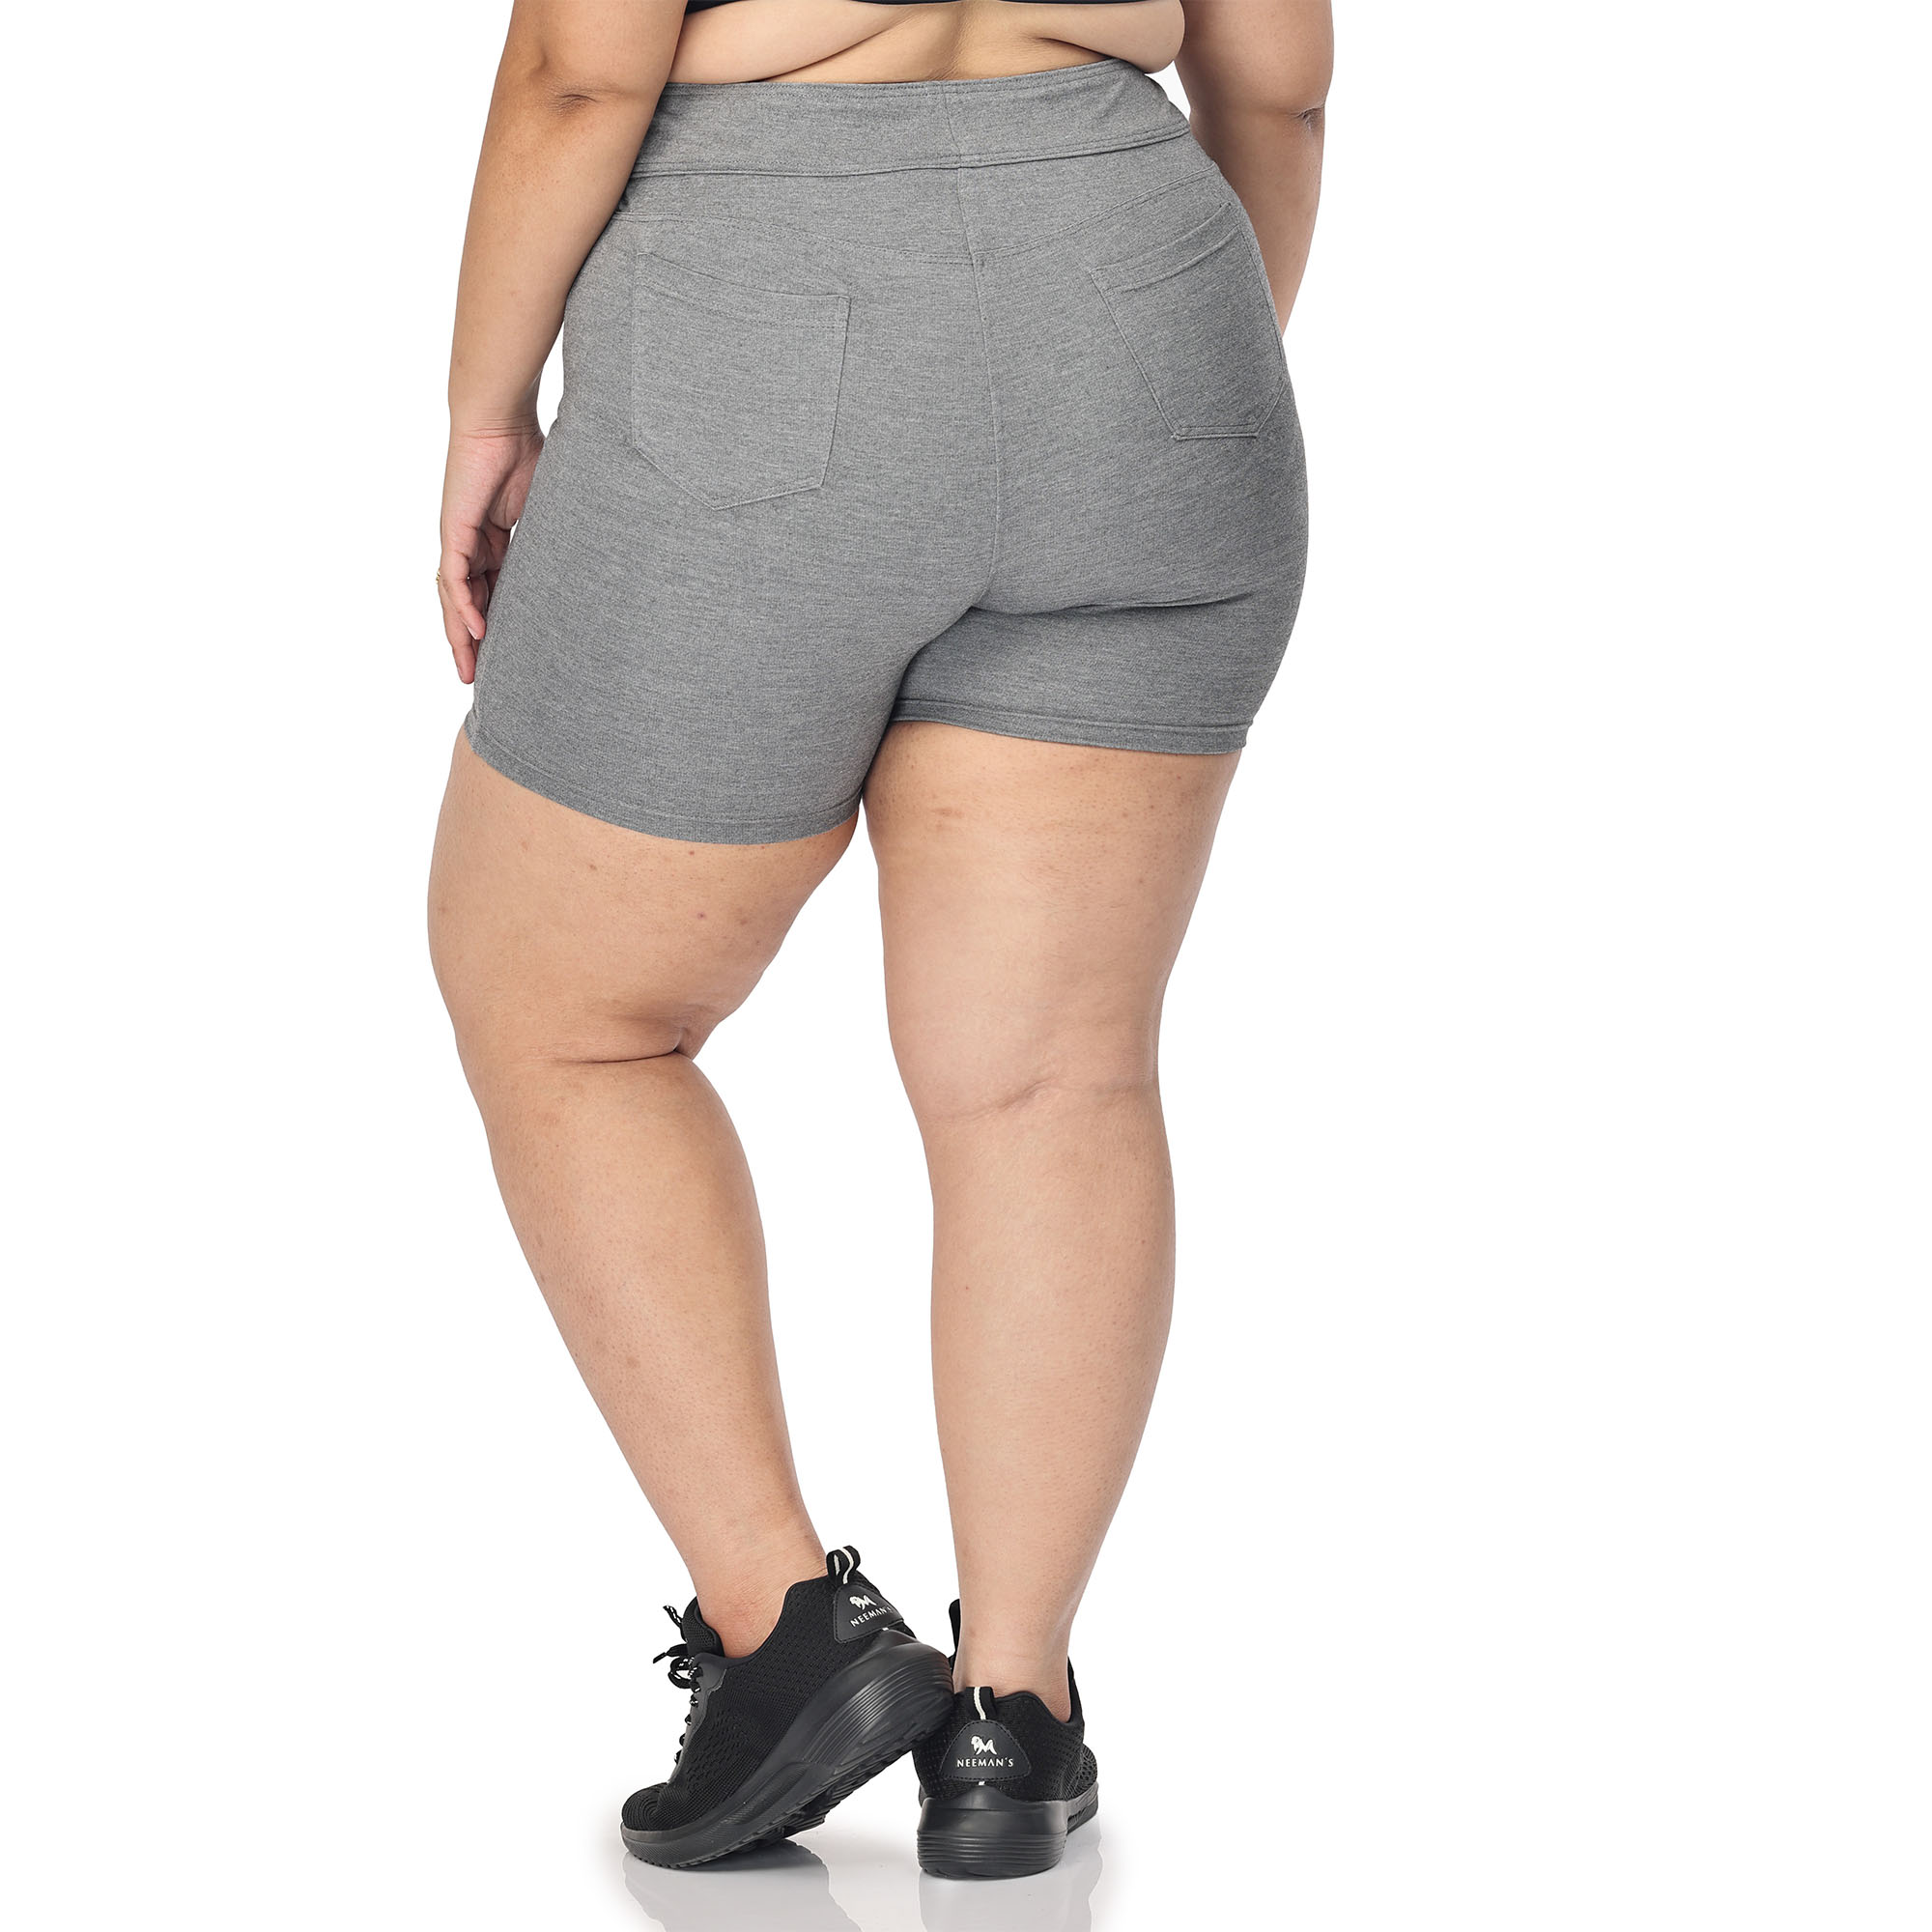 Grey shorts women - Plus size active shape wear - 2 back pockets - Belore  Slims